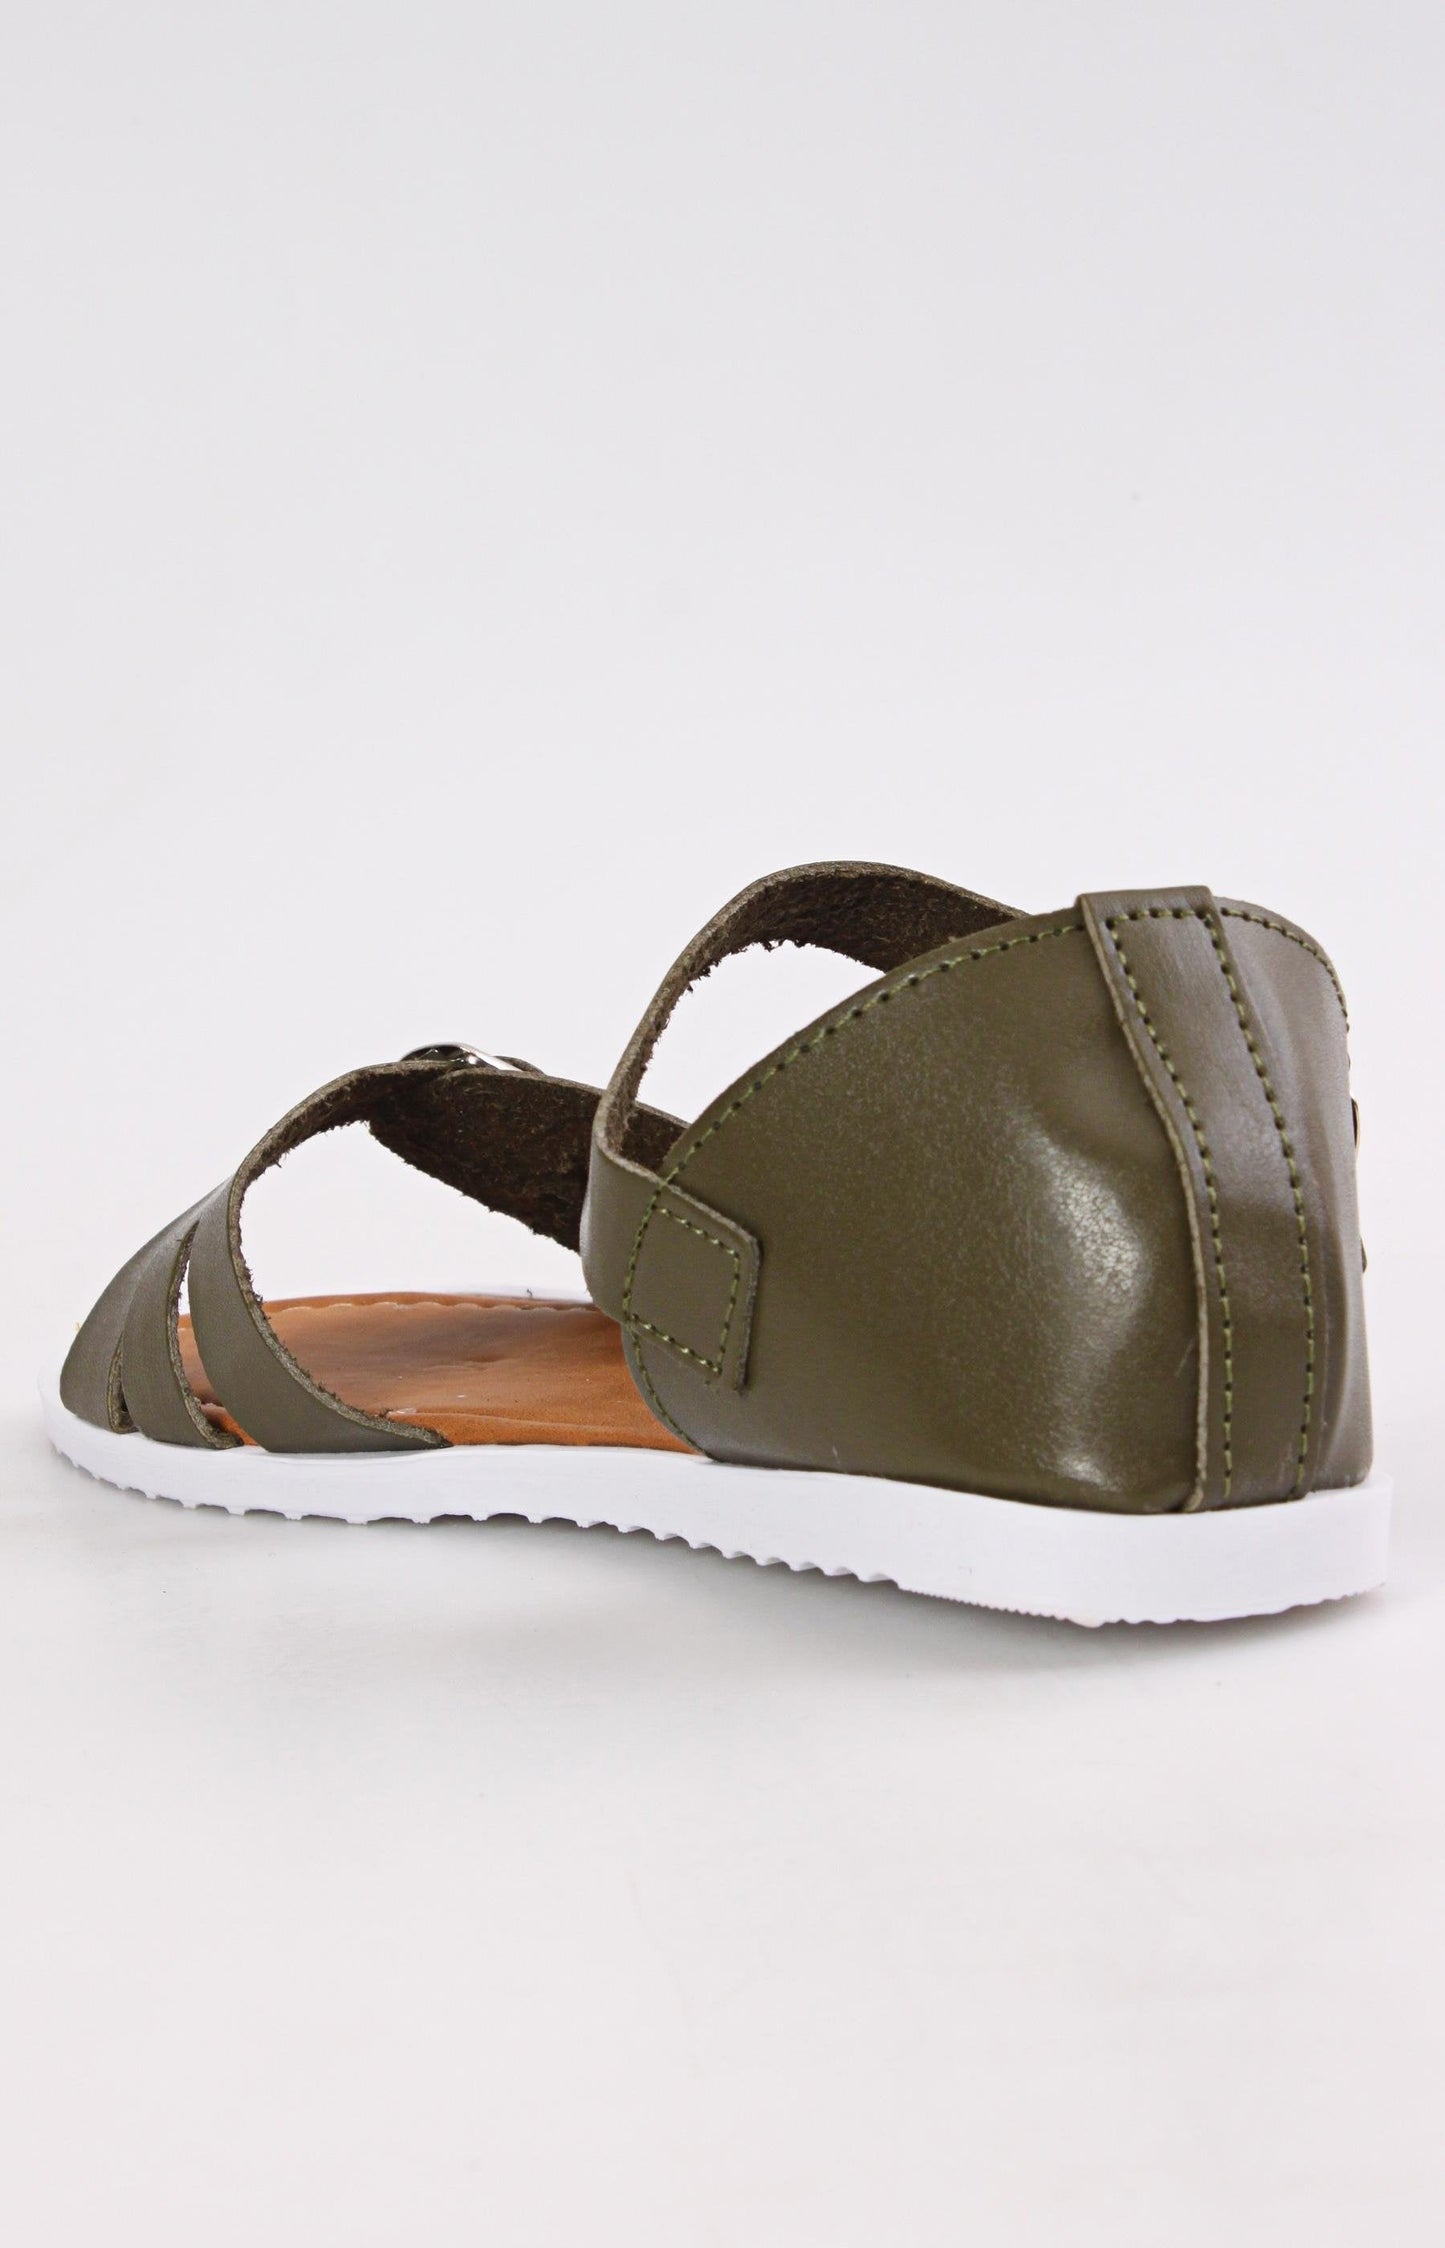 Ladies' Buckle Sandals - Olive